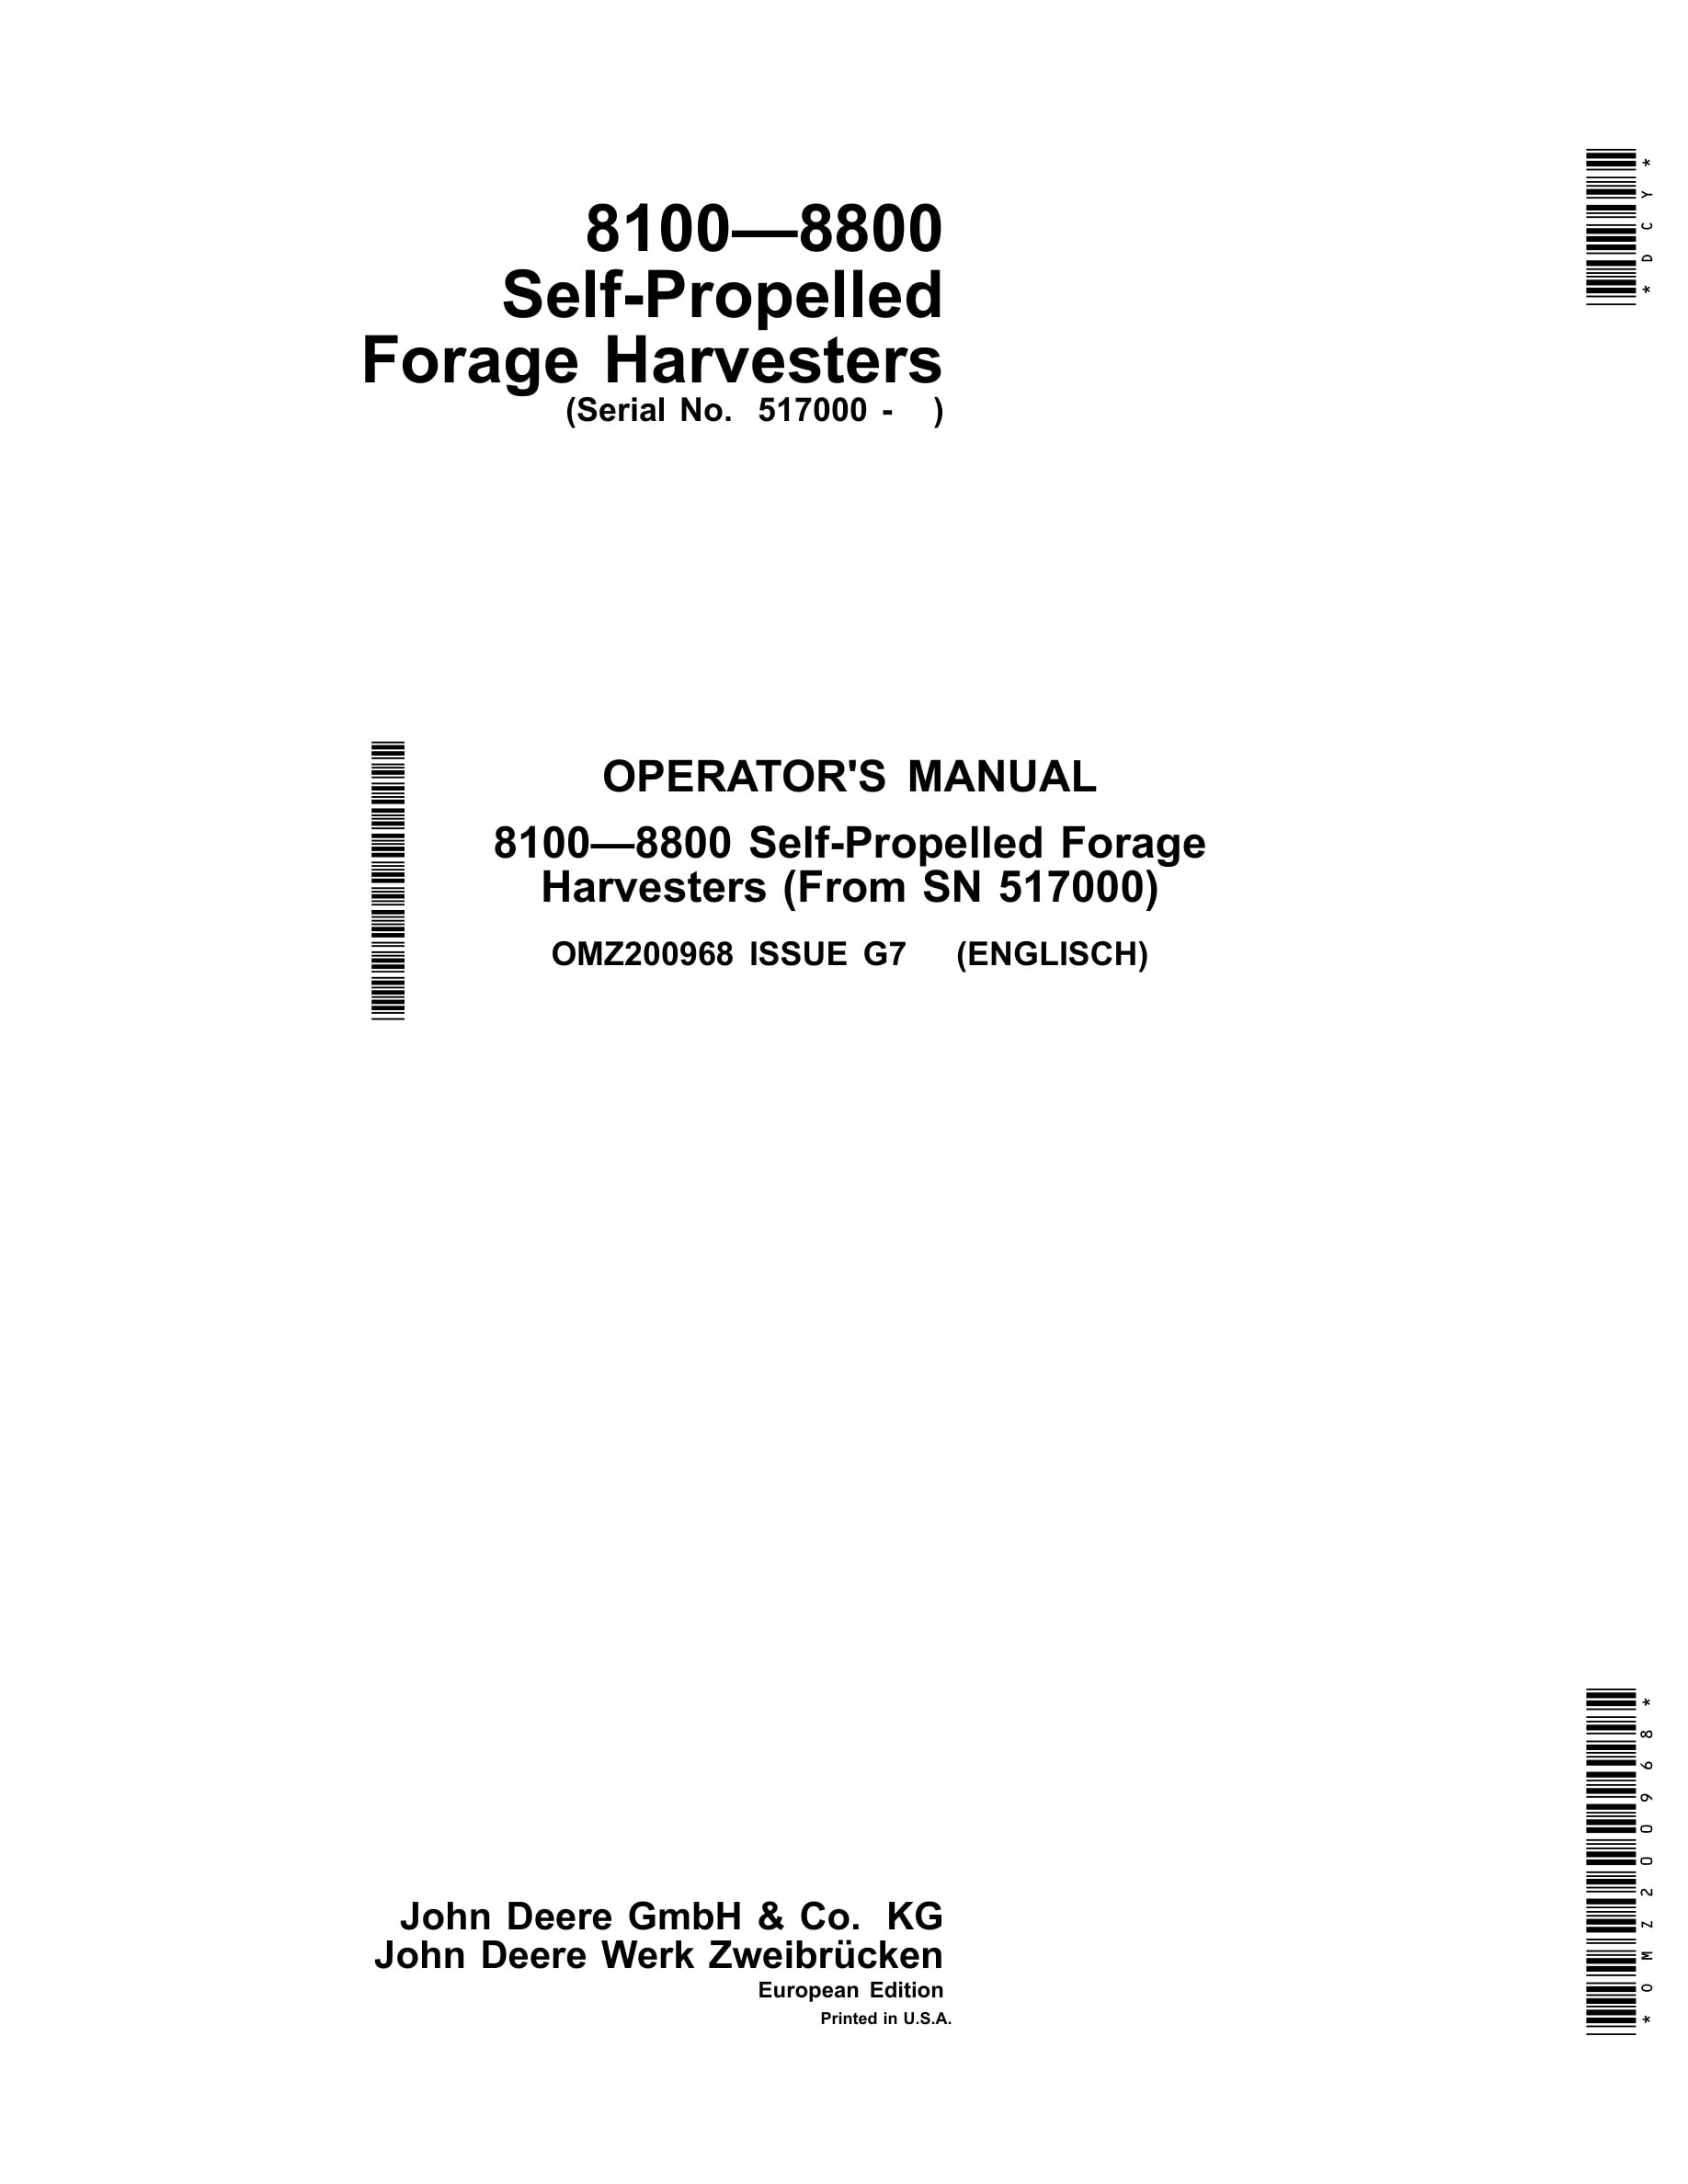 John Deere 8100 – 8800 Self-Propelled Forage Harvester Operator Manual OMZ200968-1